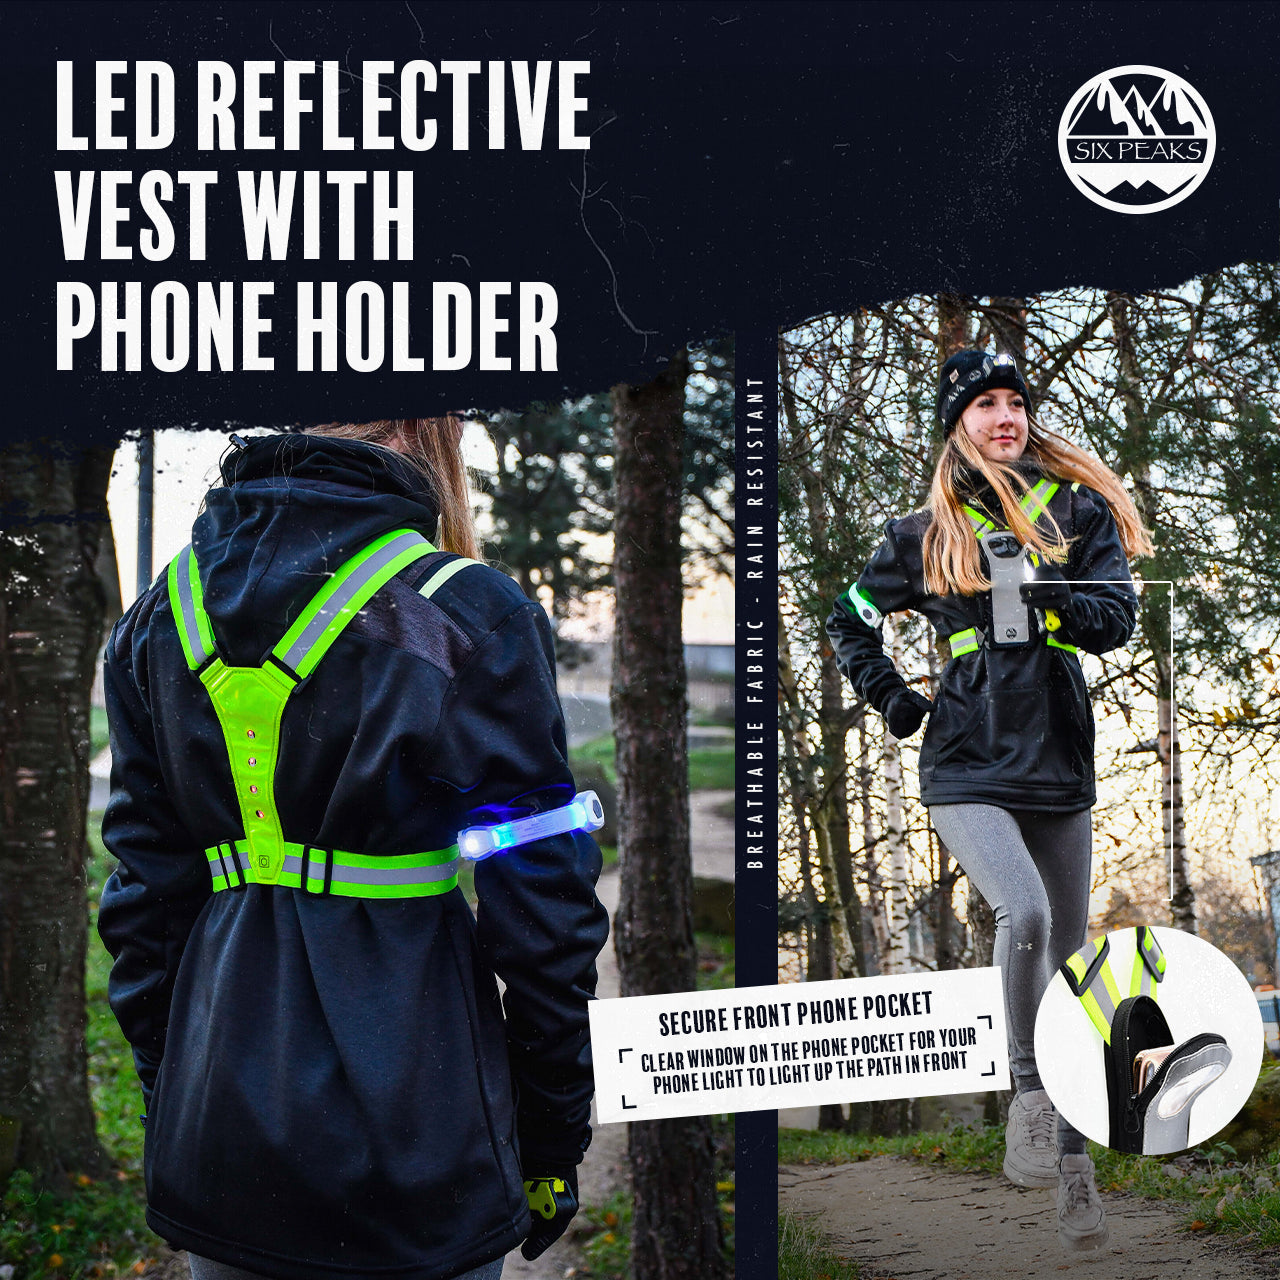 Six Peaks LED Reflective Vest